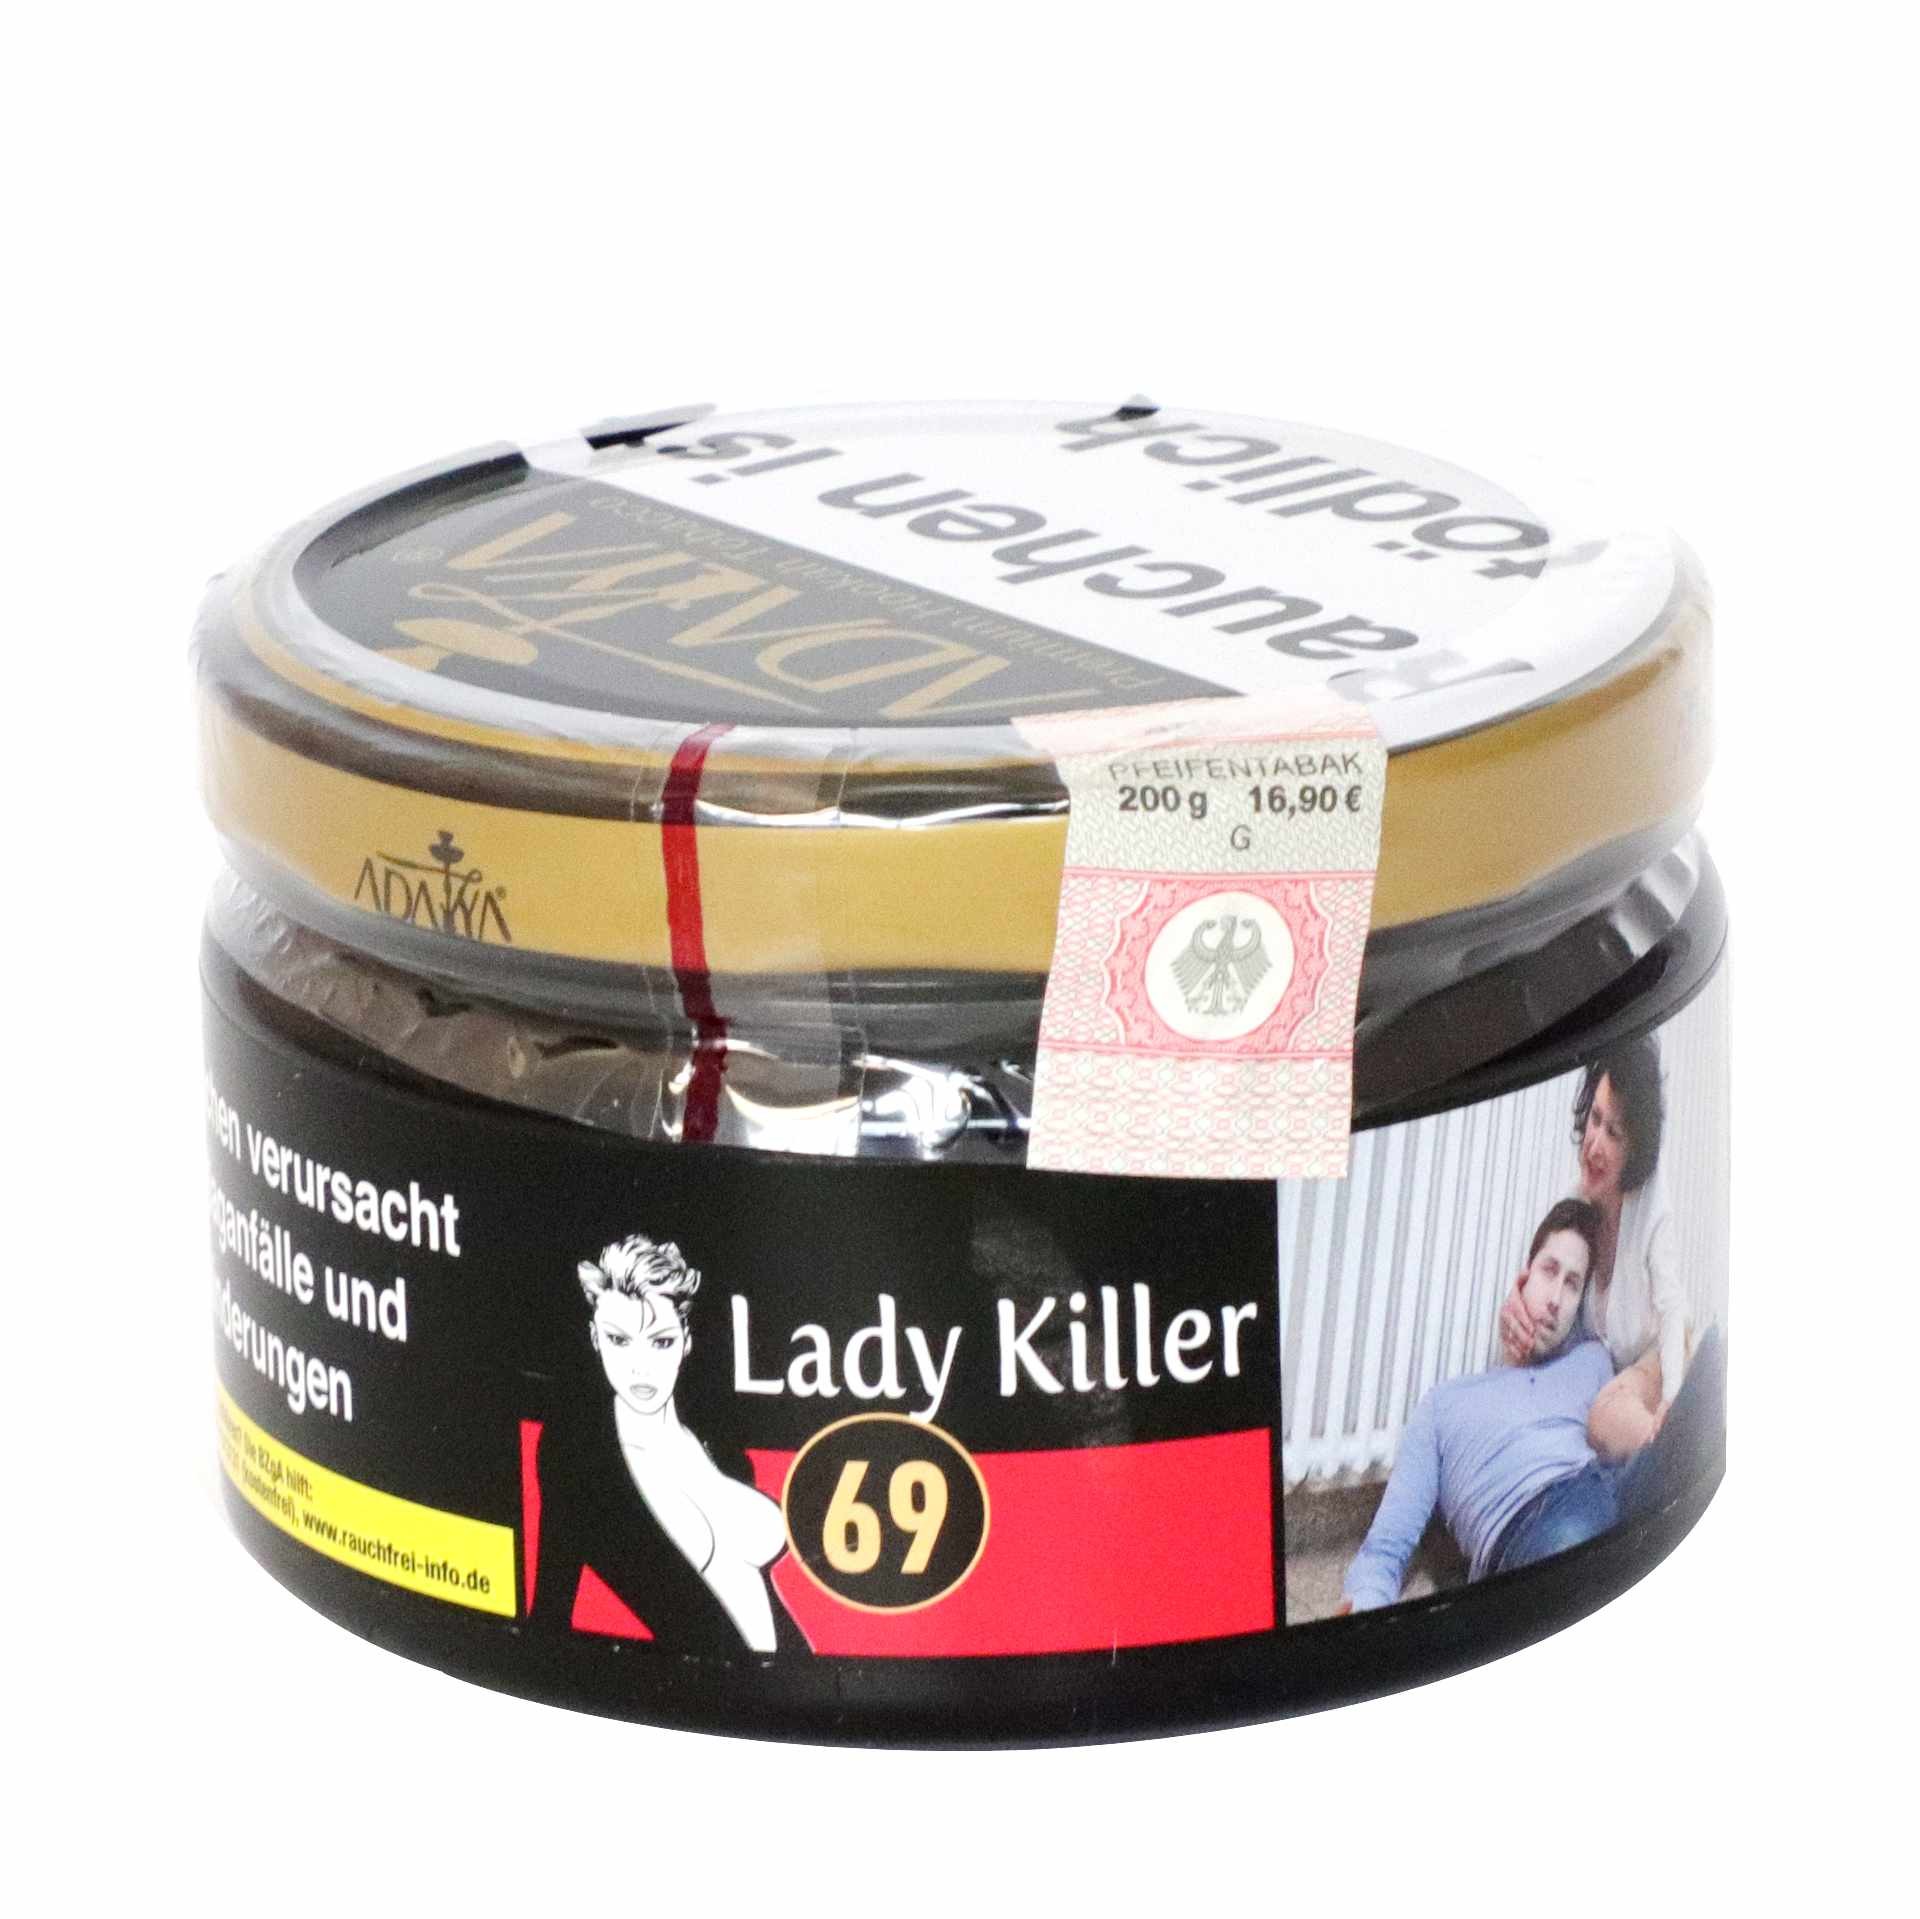 Lady Killer (69)